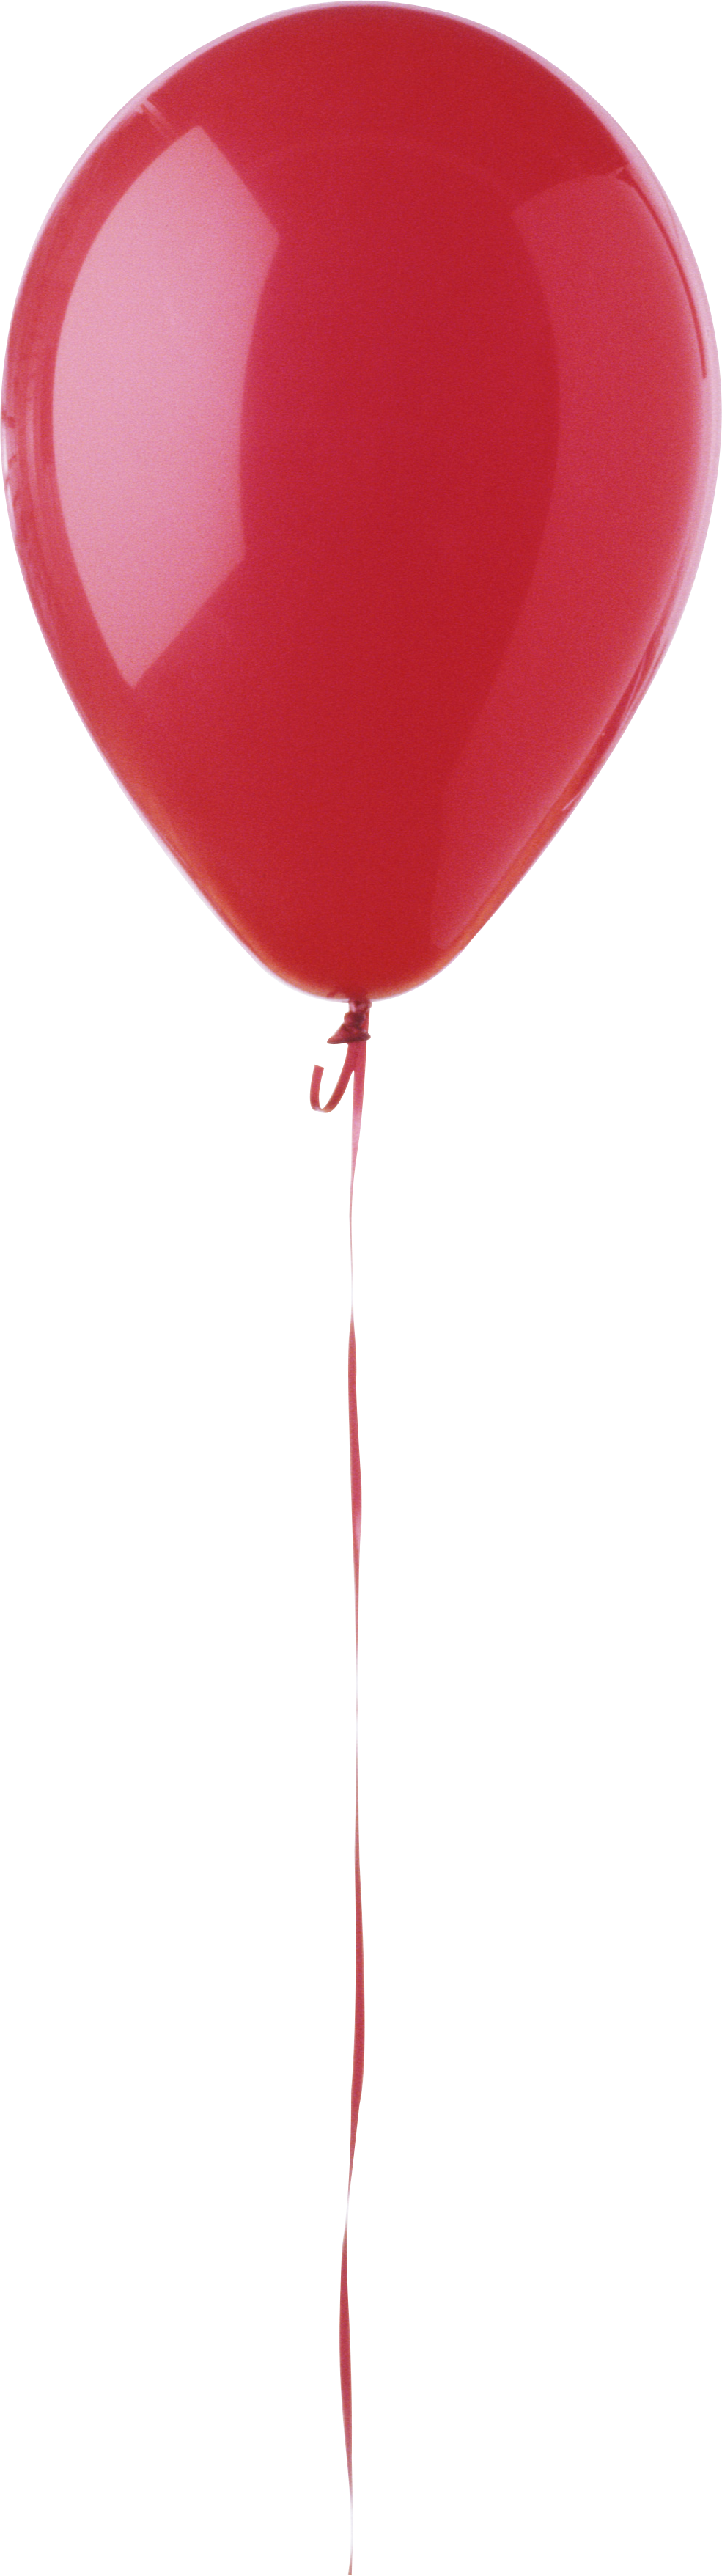 Ballon PNG Telecharger Fond